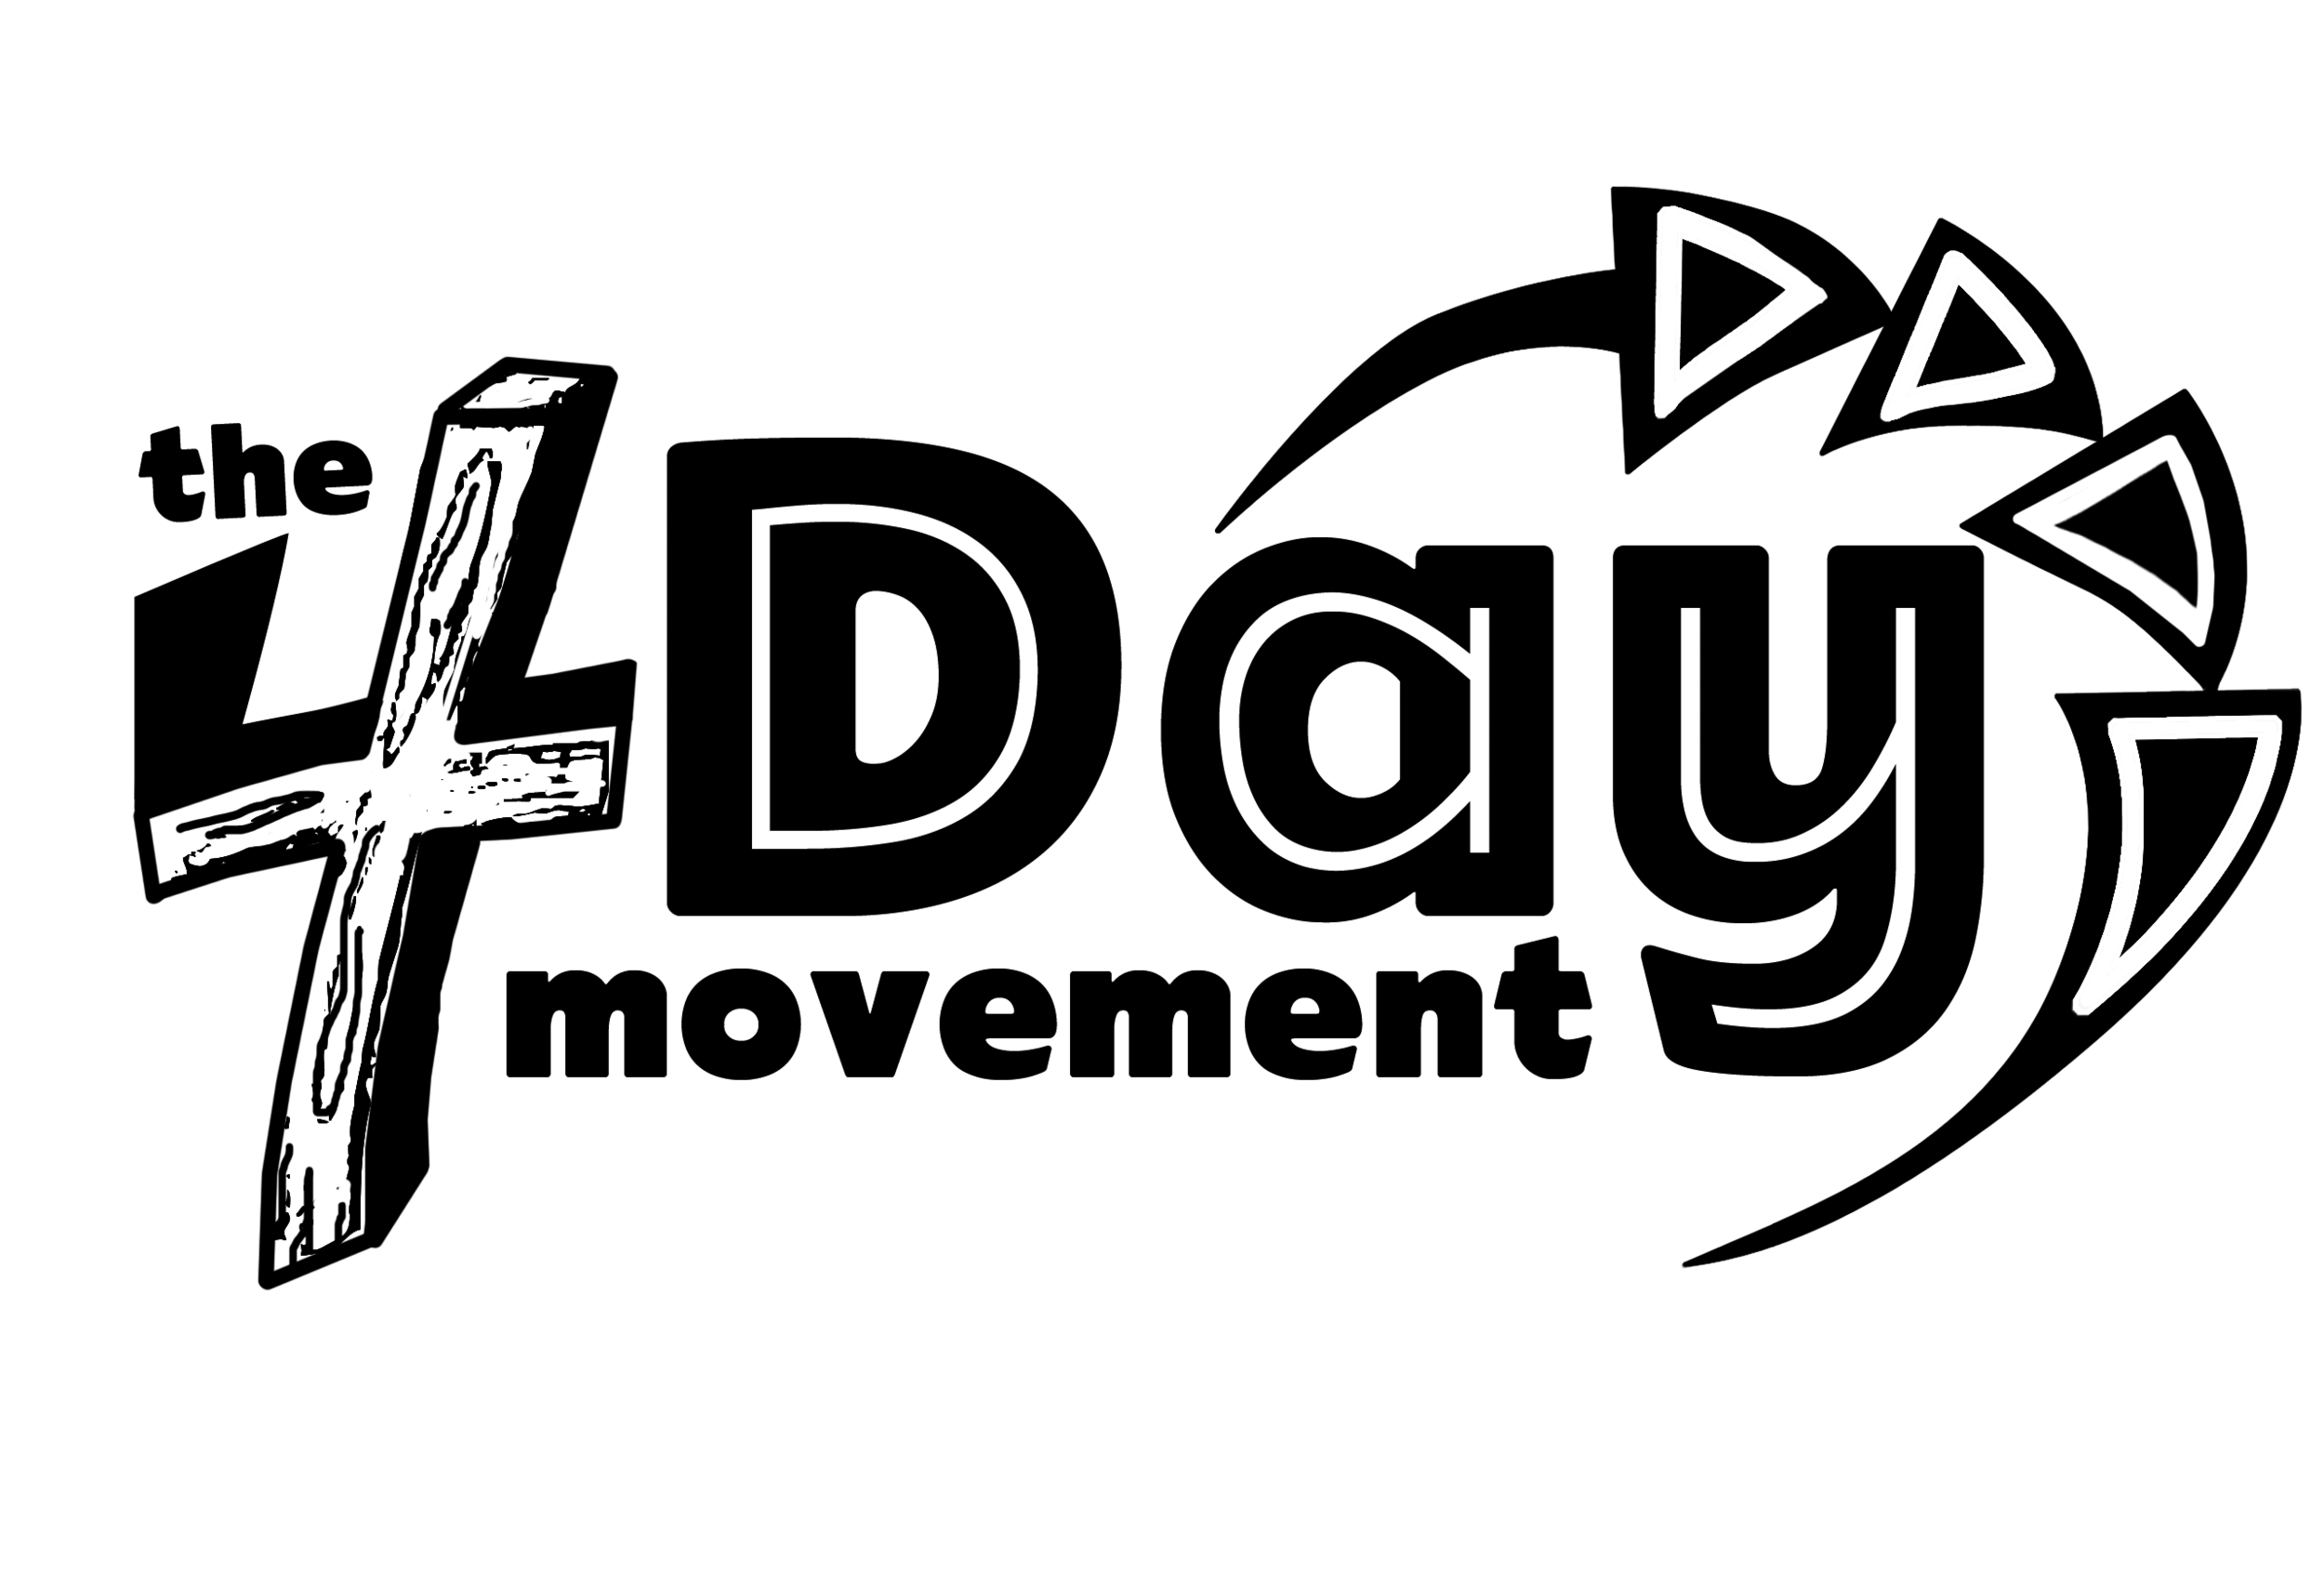 4 Day Movement